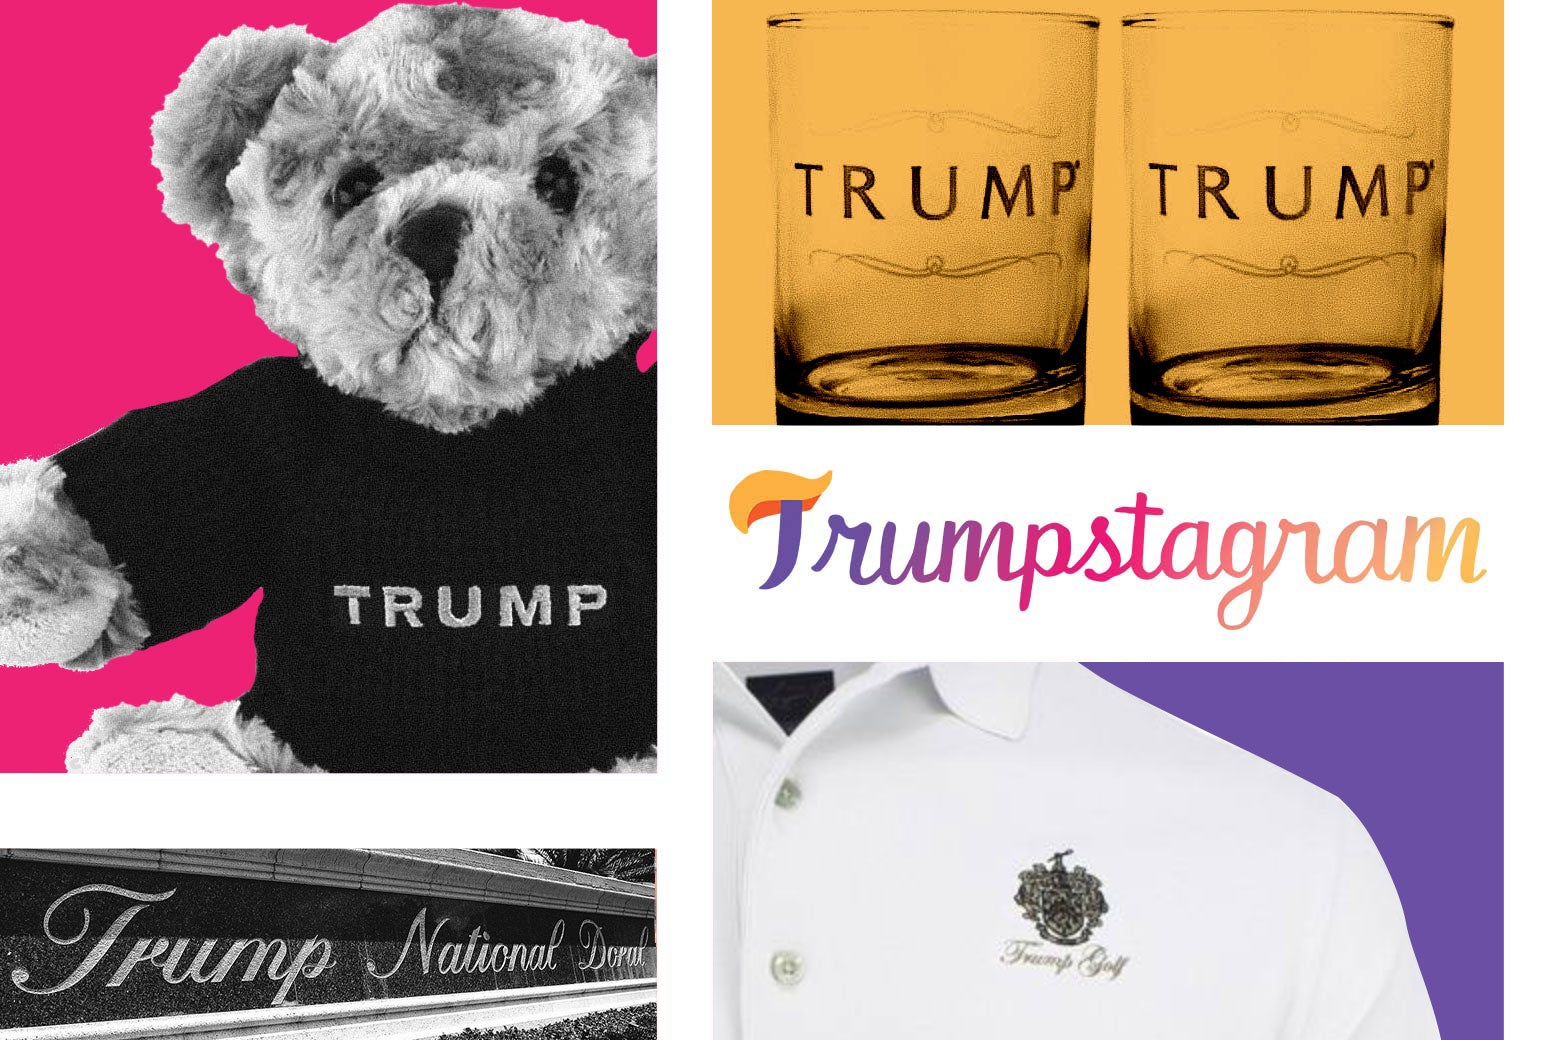 A Trump teddy bear, Trump glasses, Trump National Doral, and a Trump polo shirt.